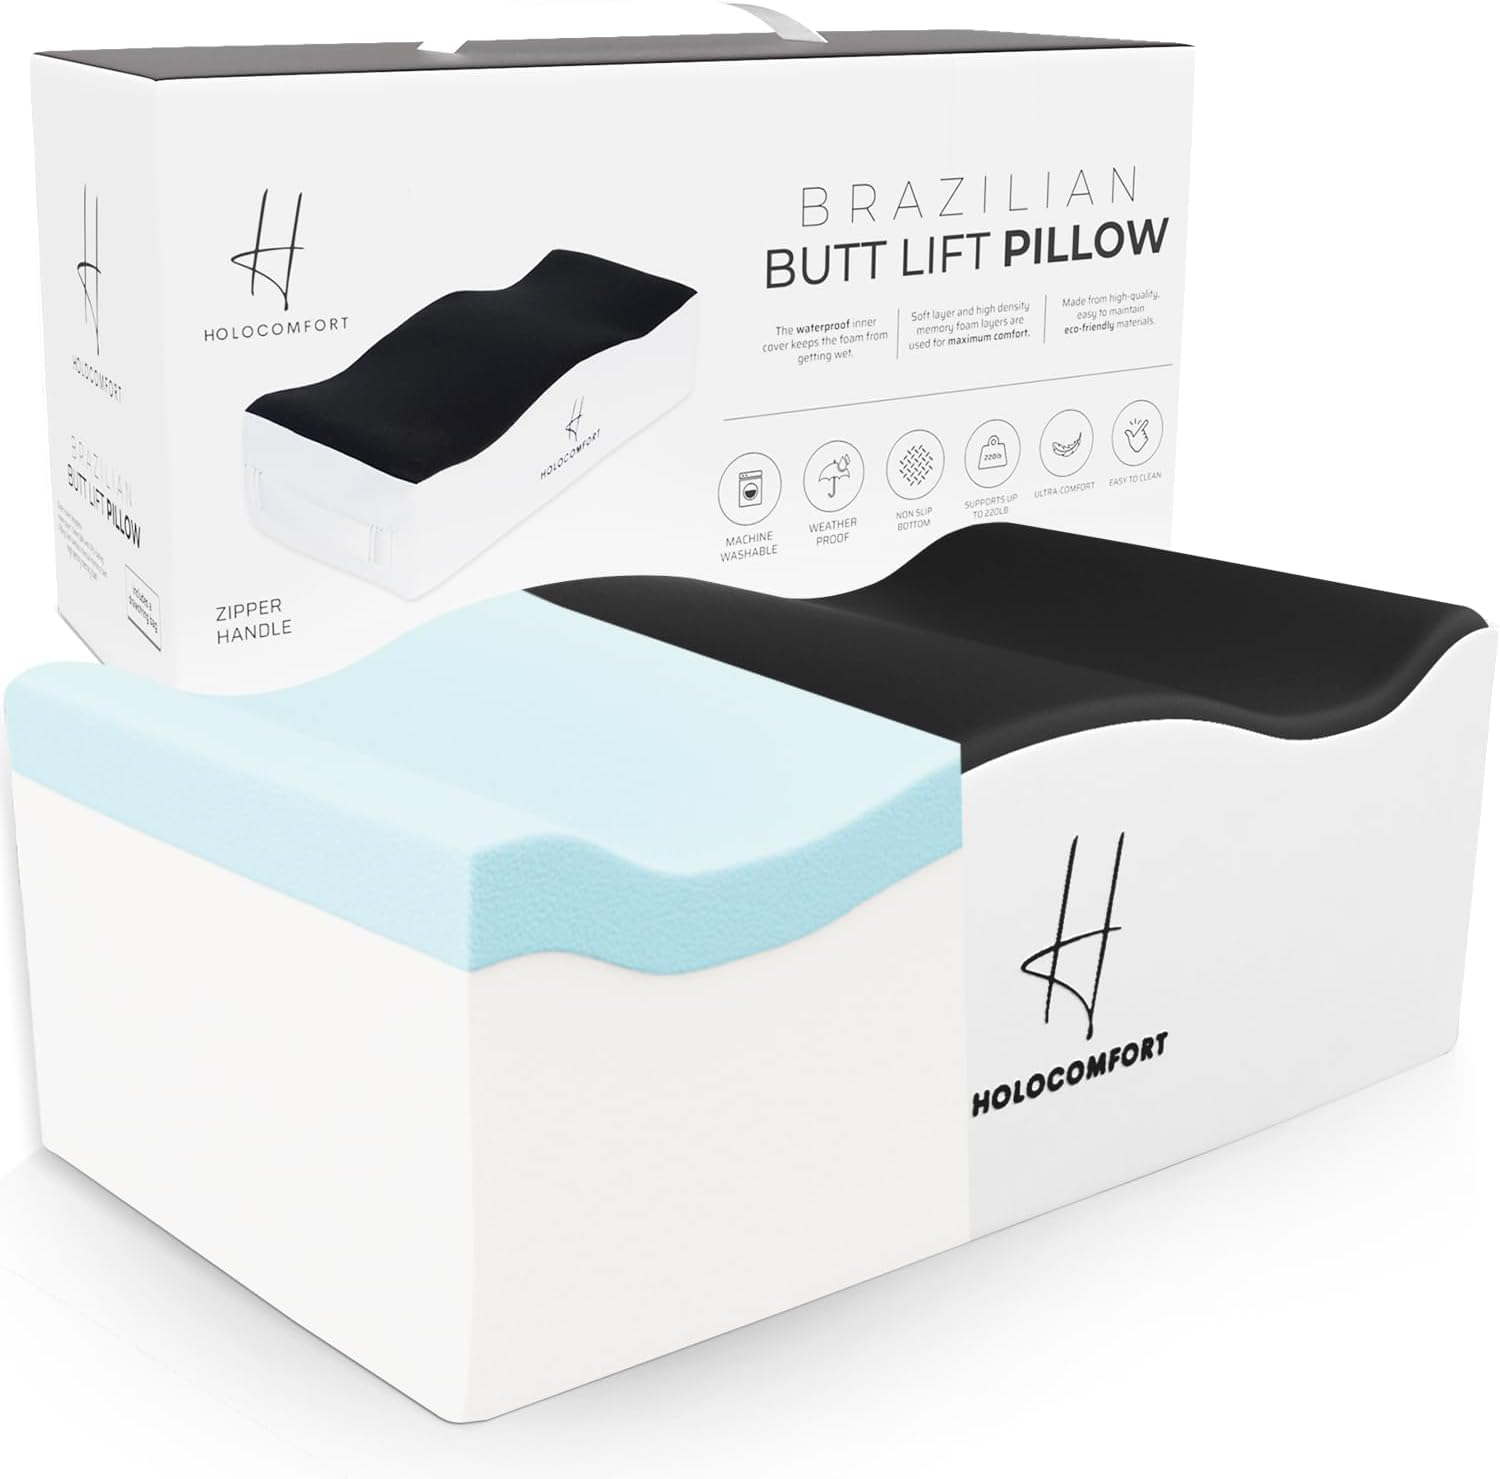 The BBL Pillow - Post Op Body Sculpting Comfort Pillow - Chicago  Liposuction by Lift Body Center